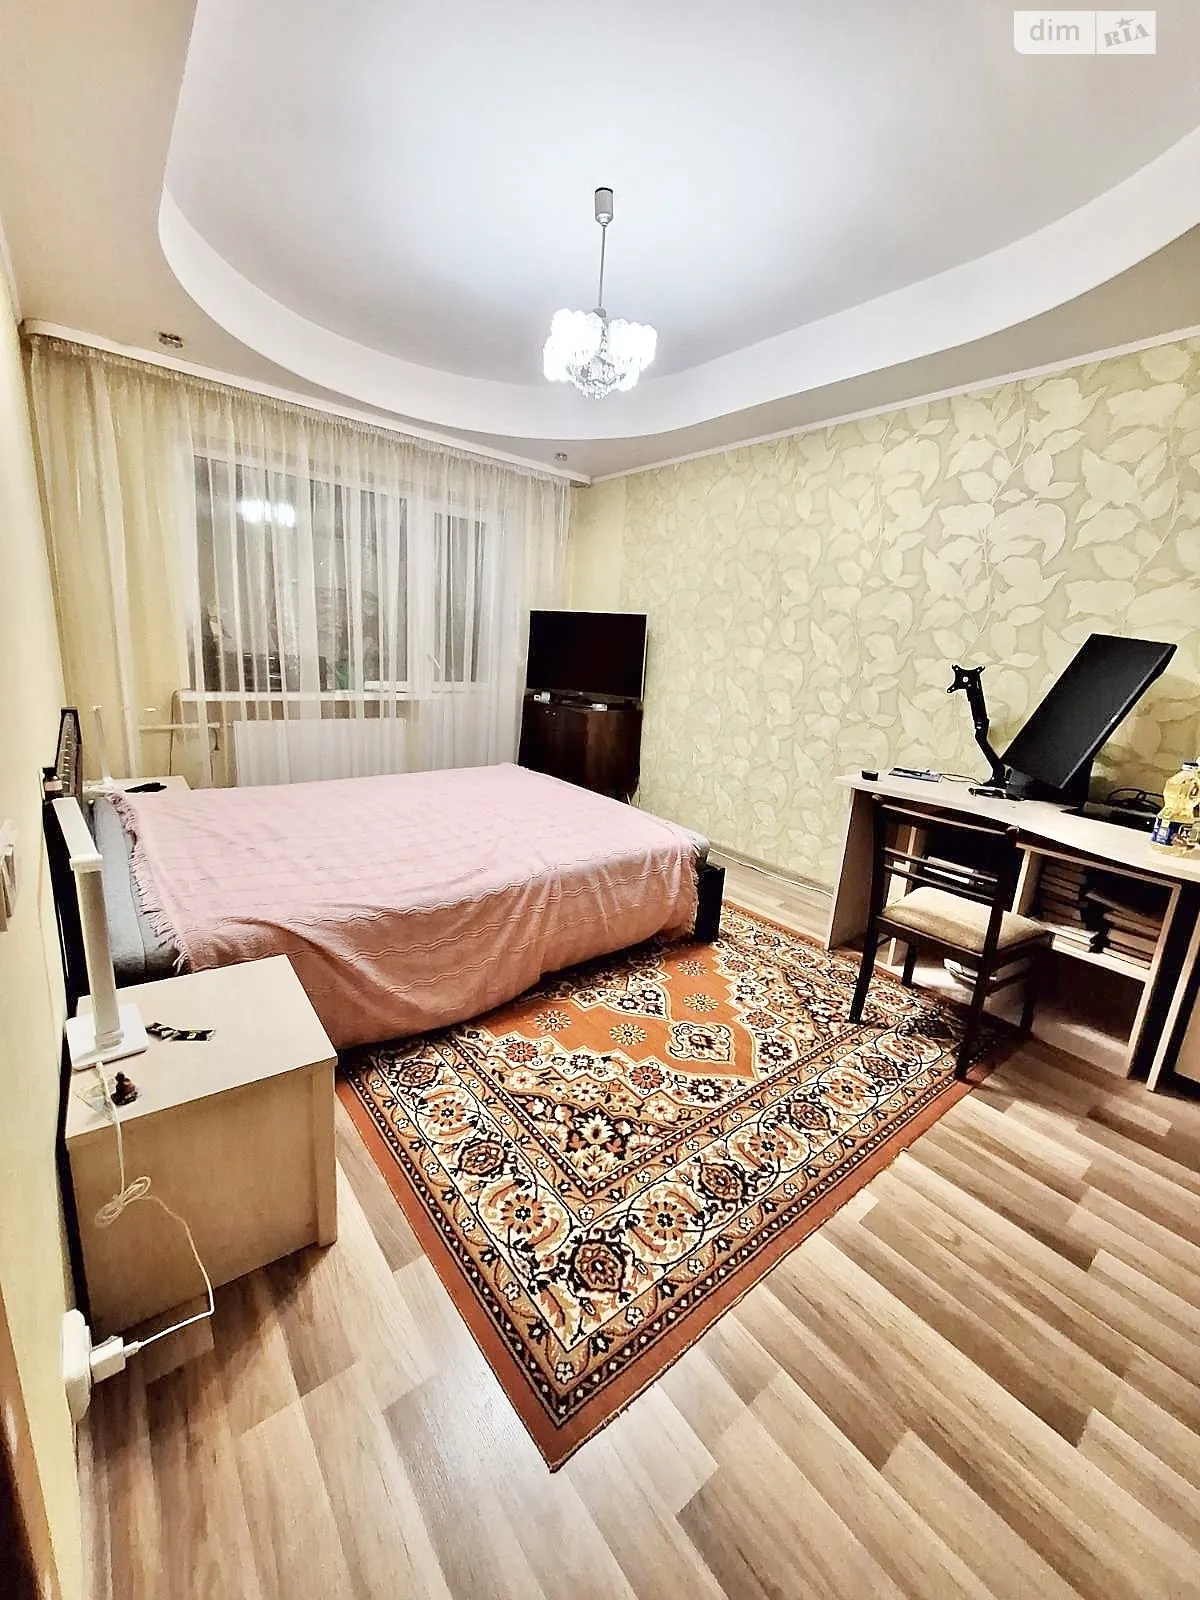 3-комнатная квартира 63 кв. м в Запорожье, ул. Пархоменко